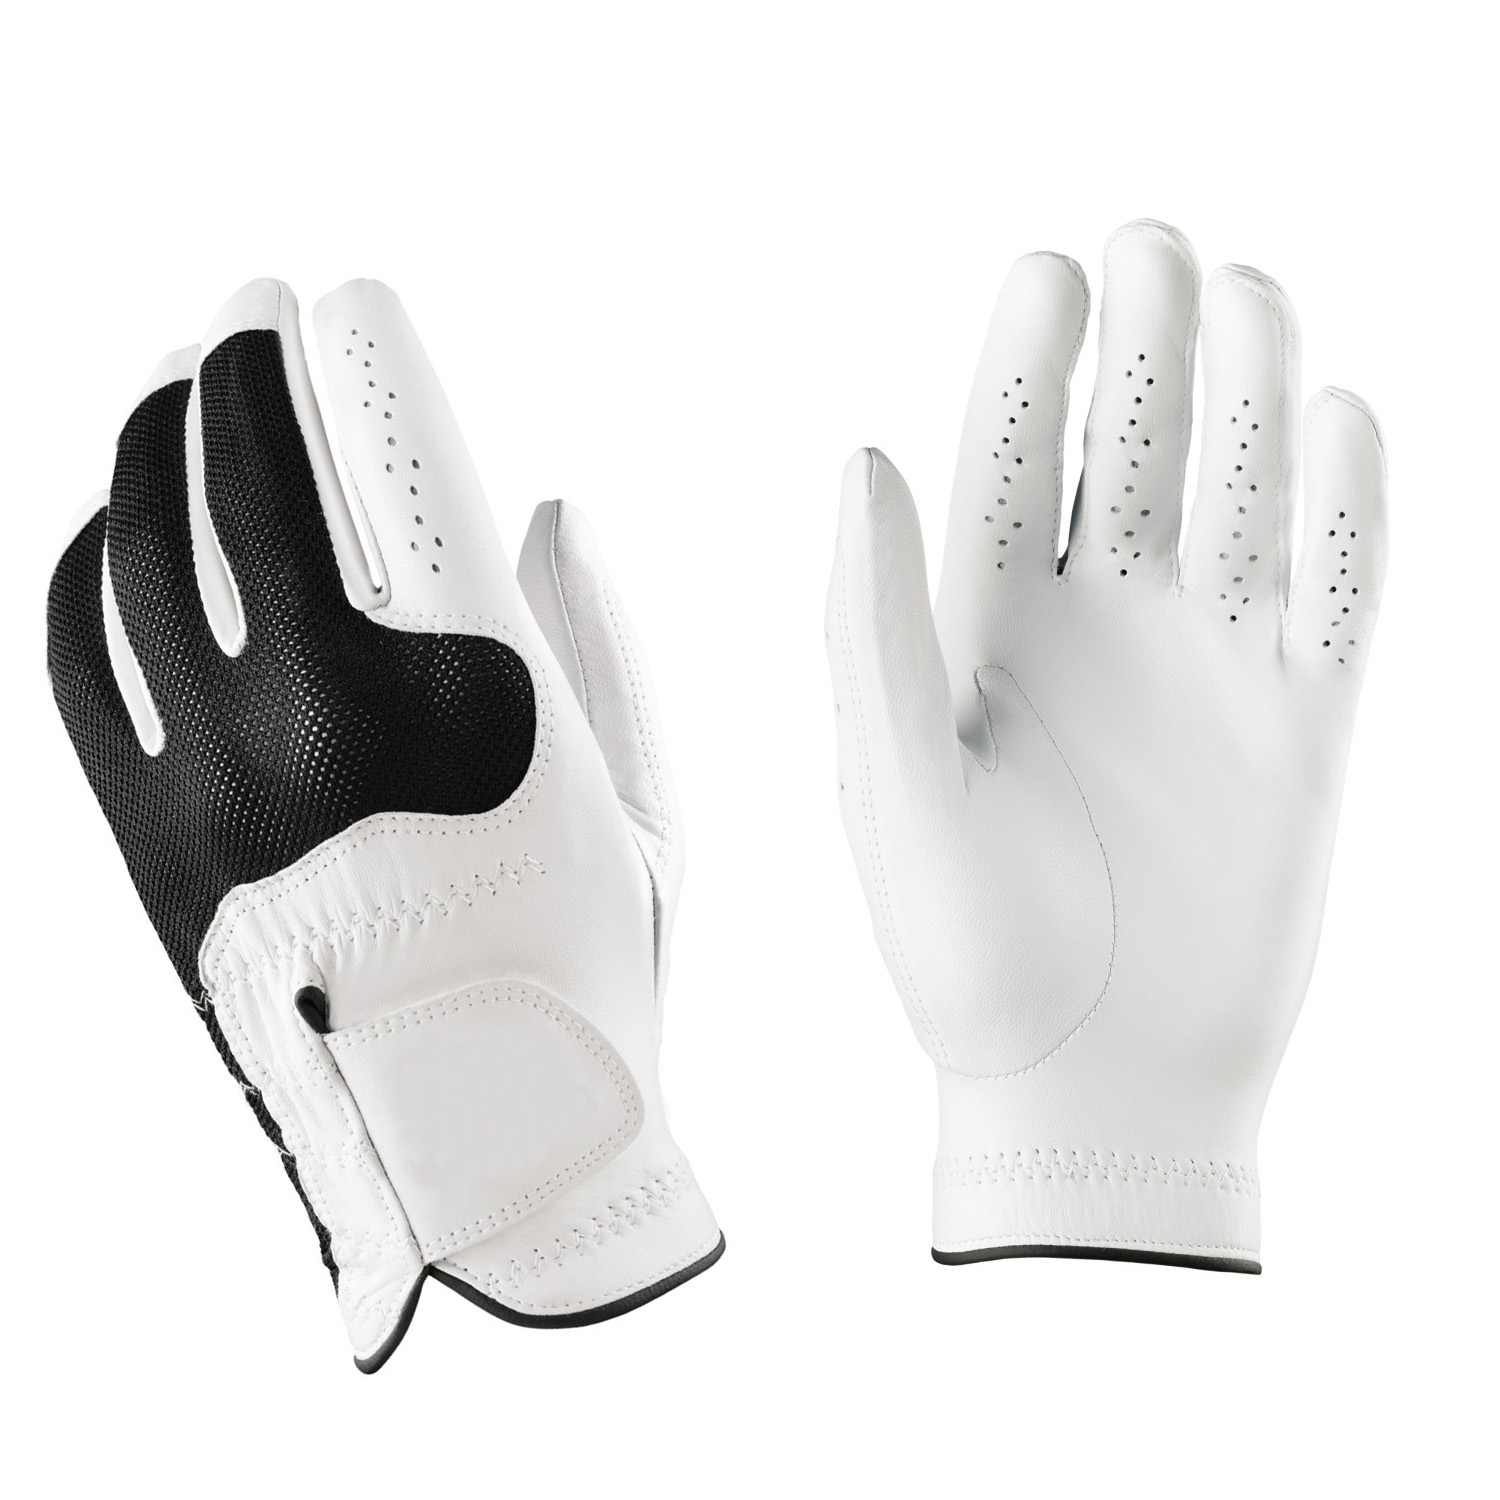 Top A grade high quality cabretta leather custom design adult golf glove